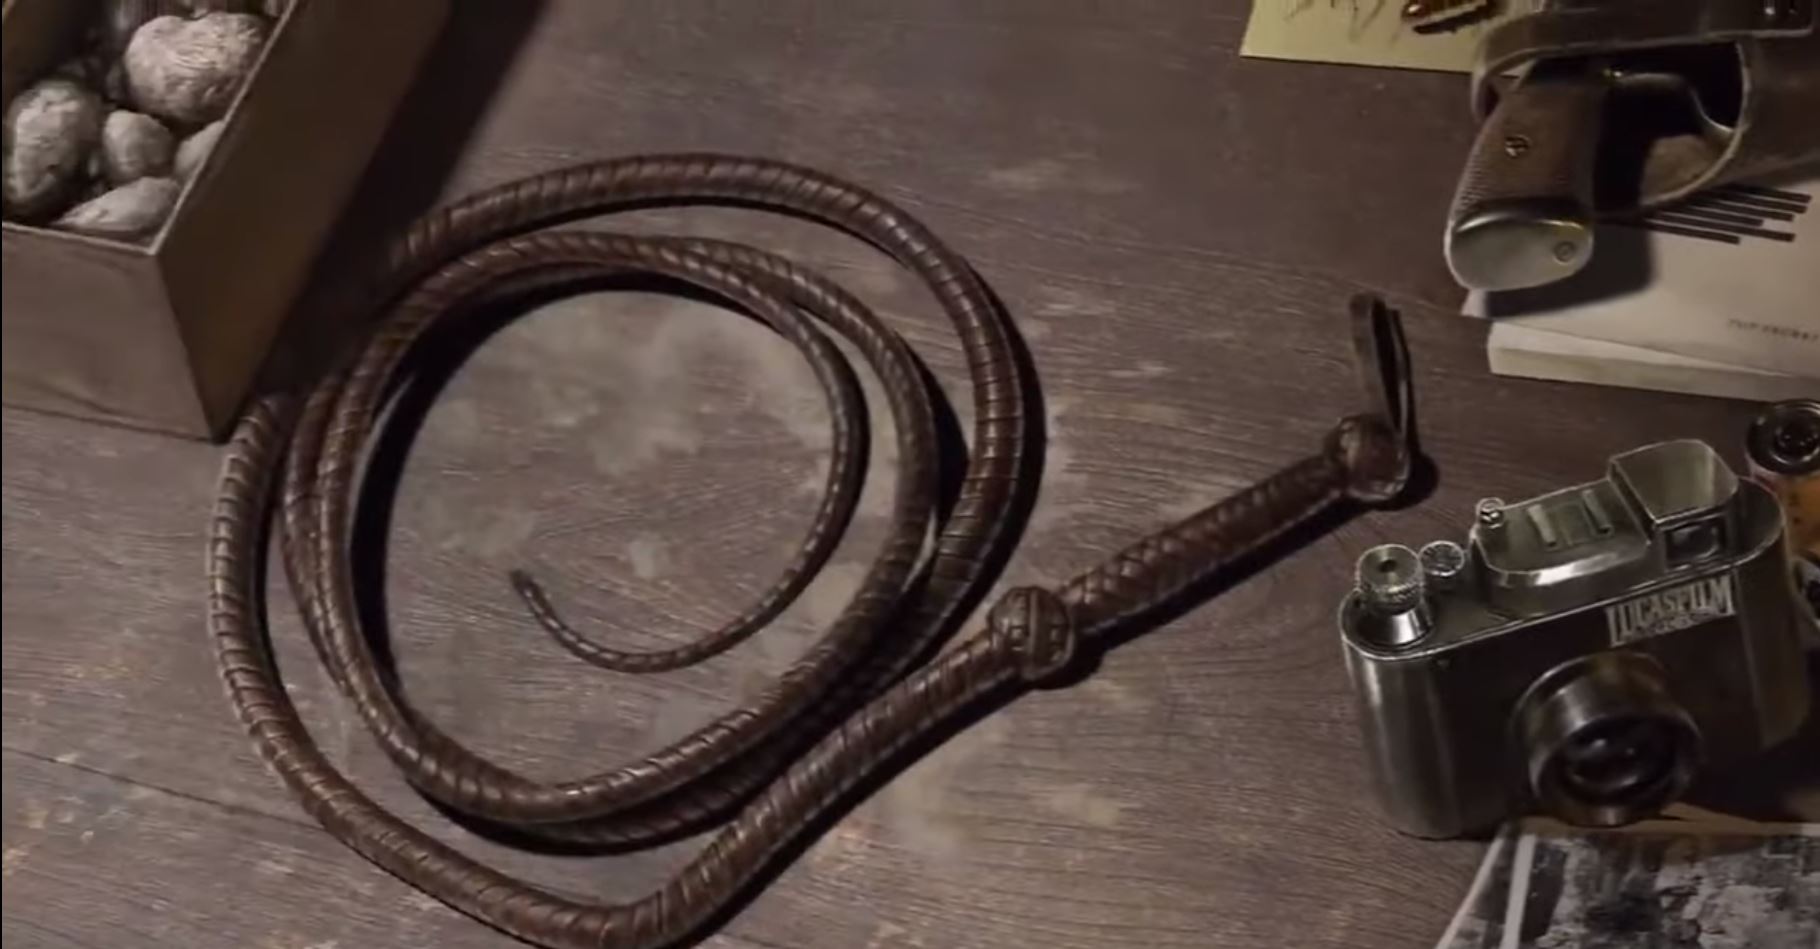 Bethesda S Indiana Jones Clues Found In Trailer Jioforme